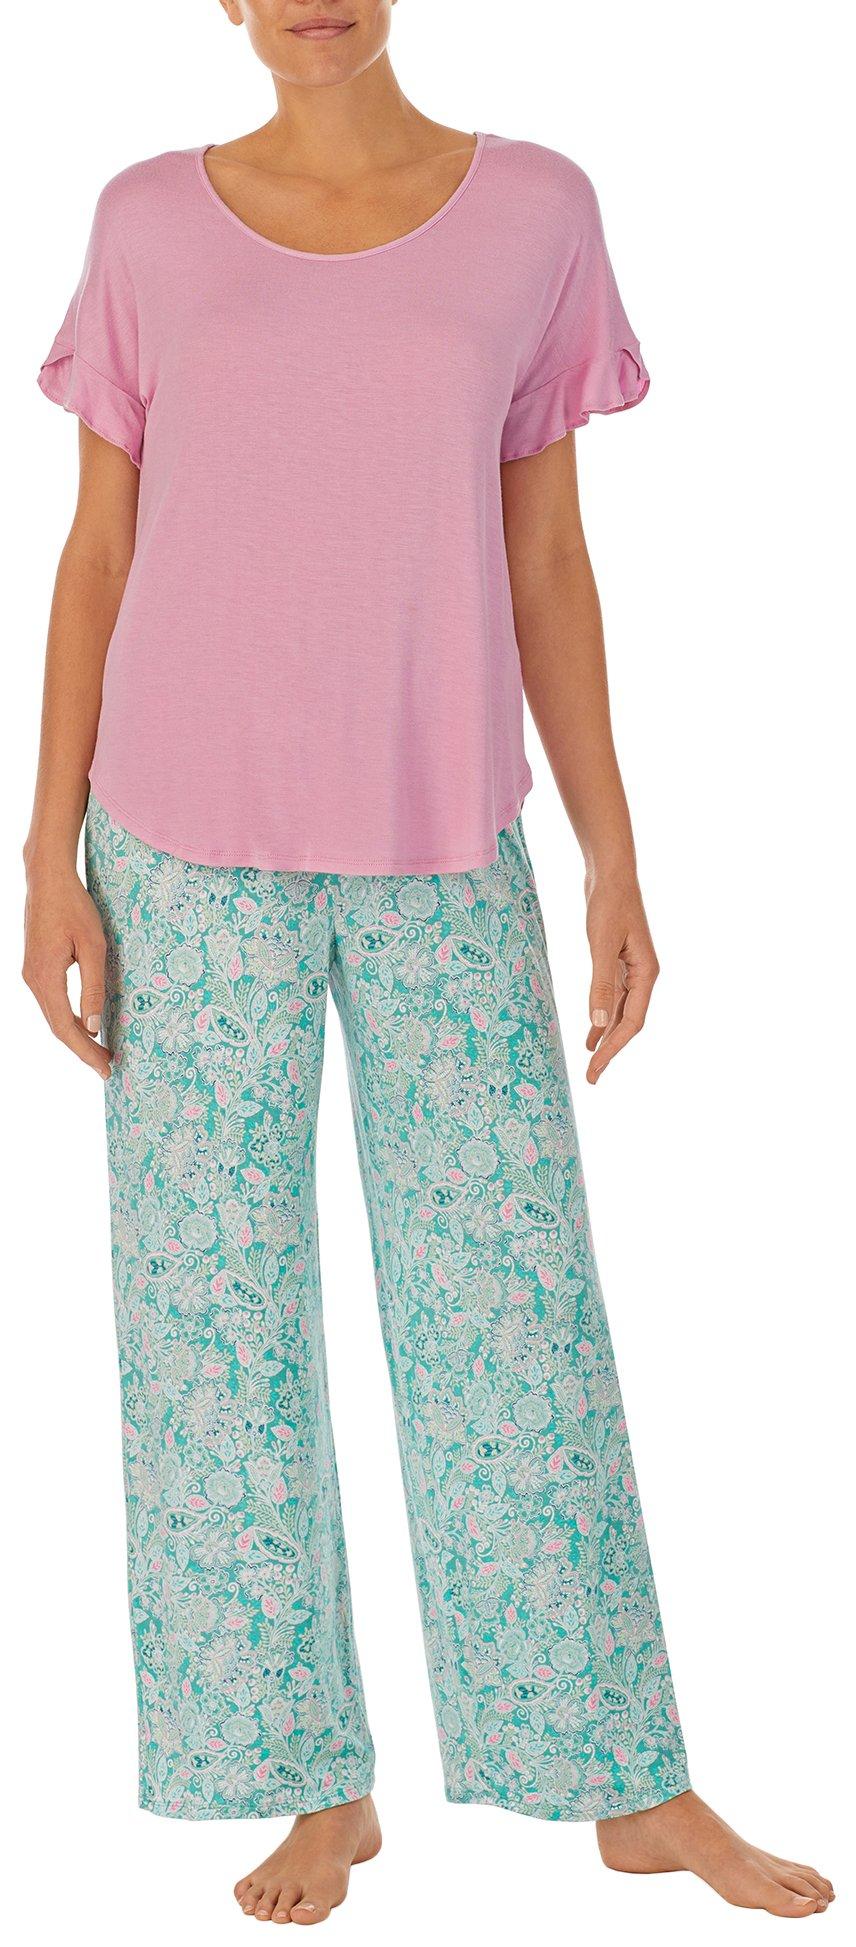 Ellen Tracy Womens 2-Pc. Solid Top & Floral Pants Sleep Set